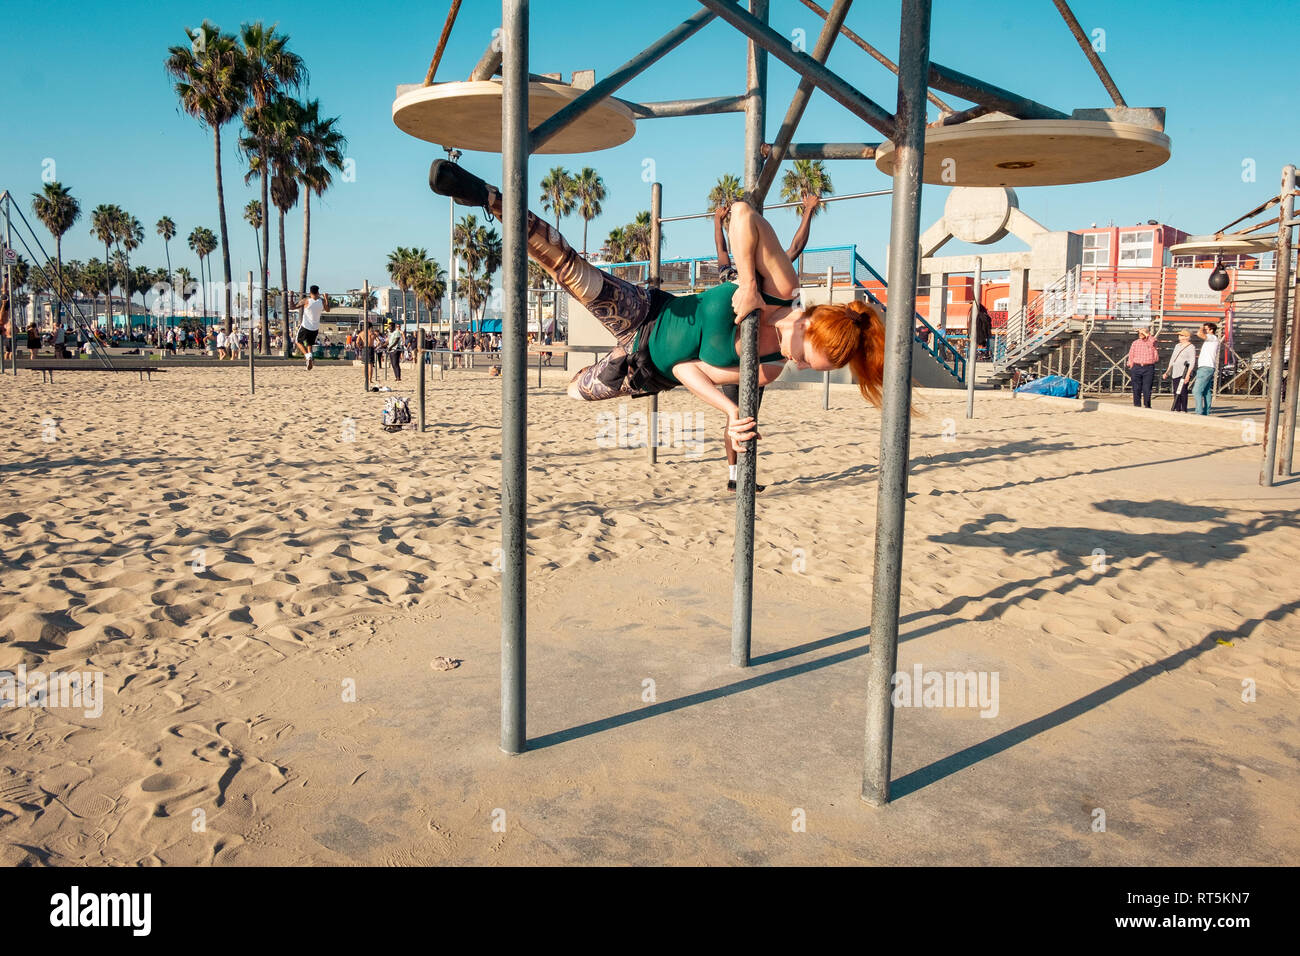 USA, California, Los Angeles, Venice, Musle Beach, sporty woman on pole, poledance Stock Photo